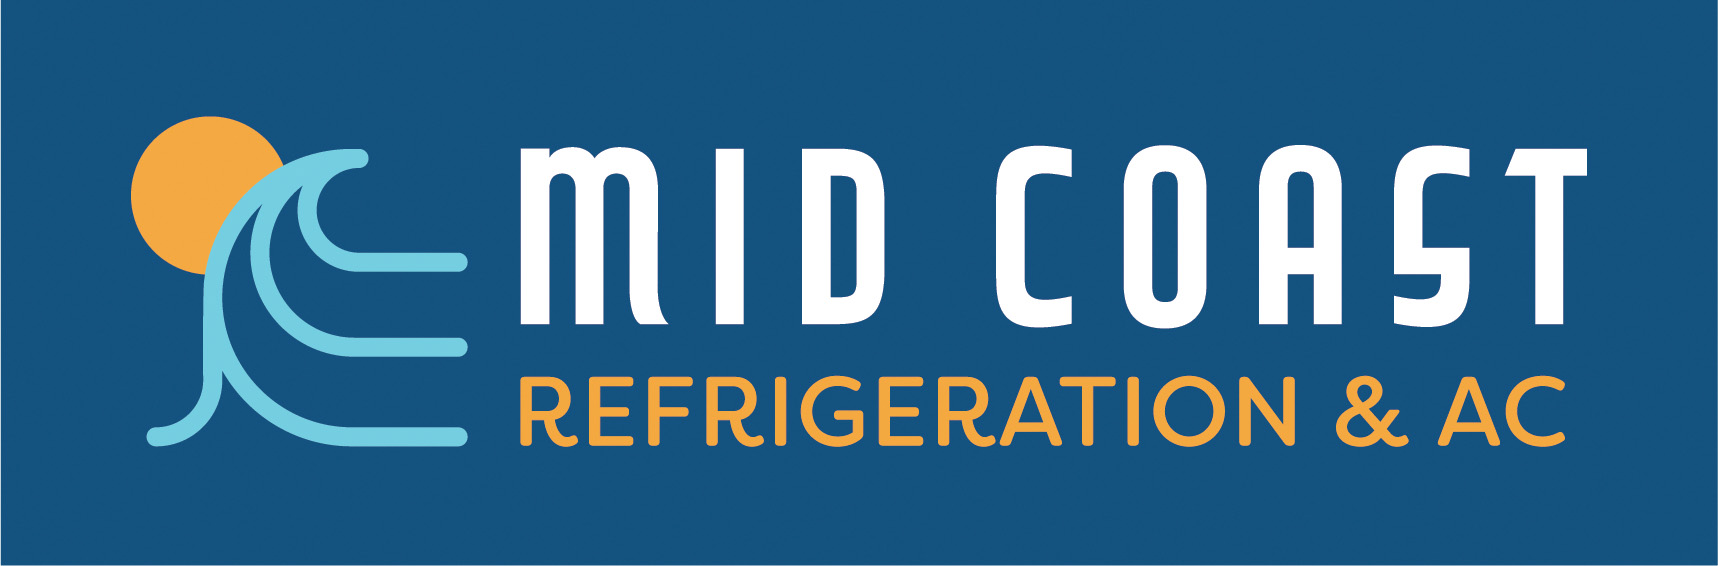 Mid Coast Refrigeration & A/C